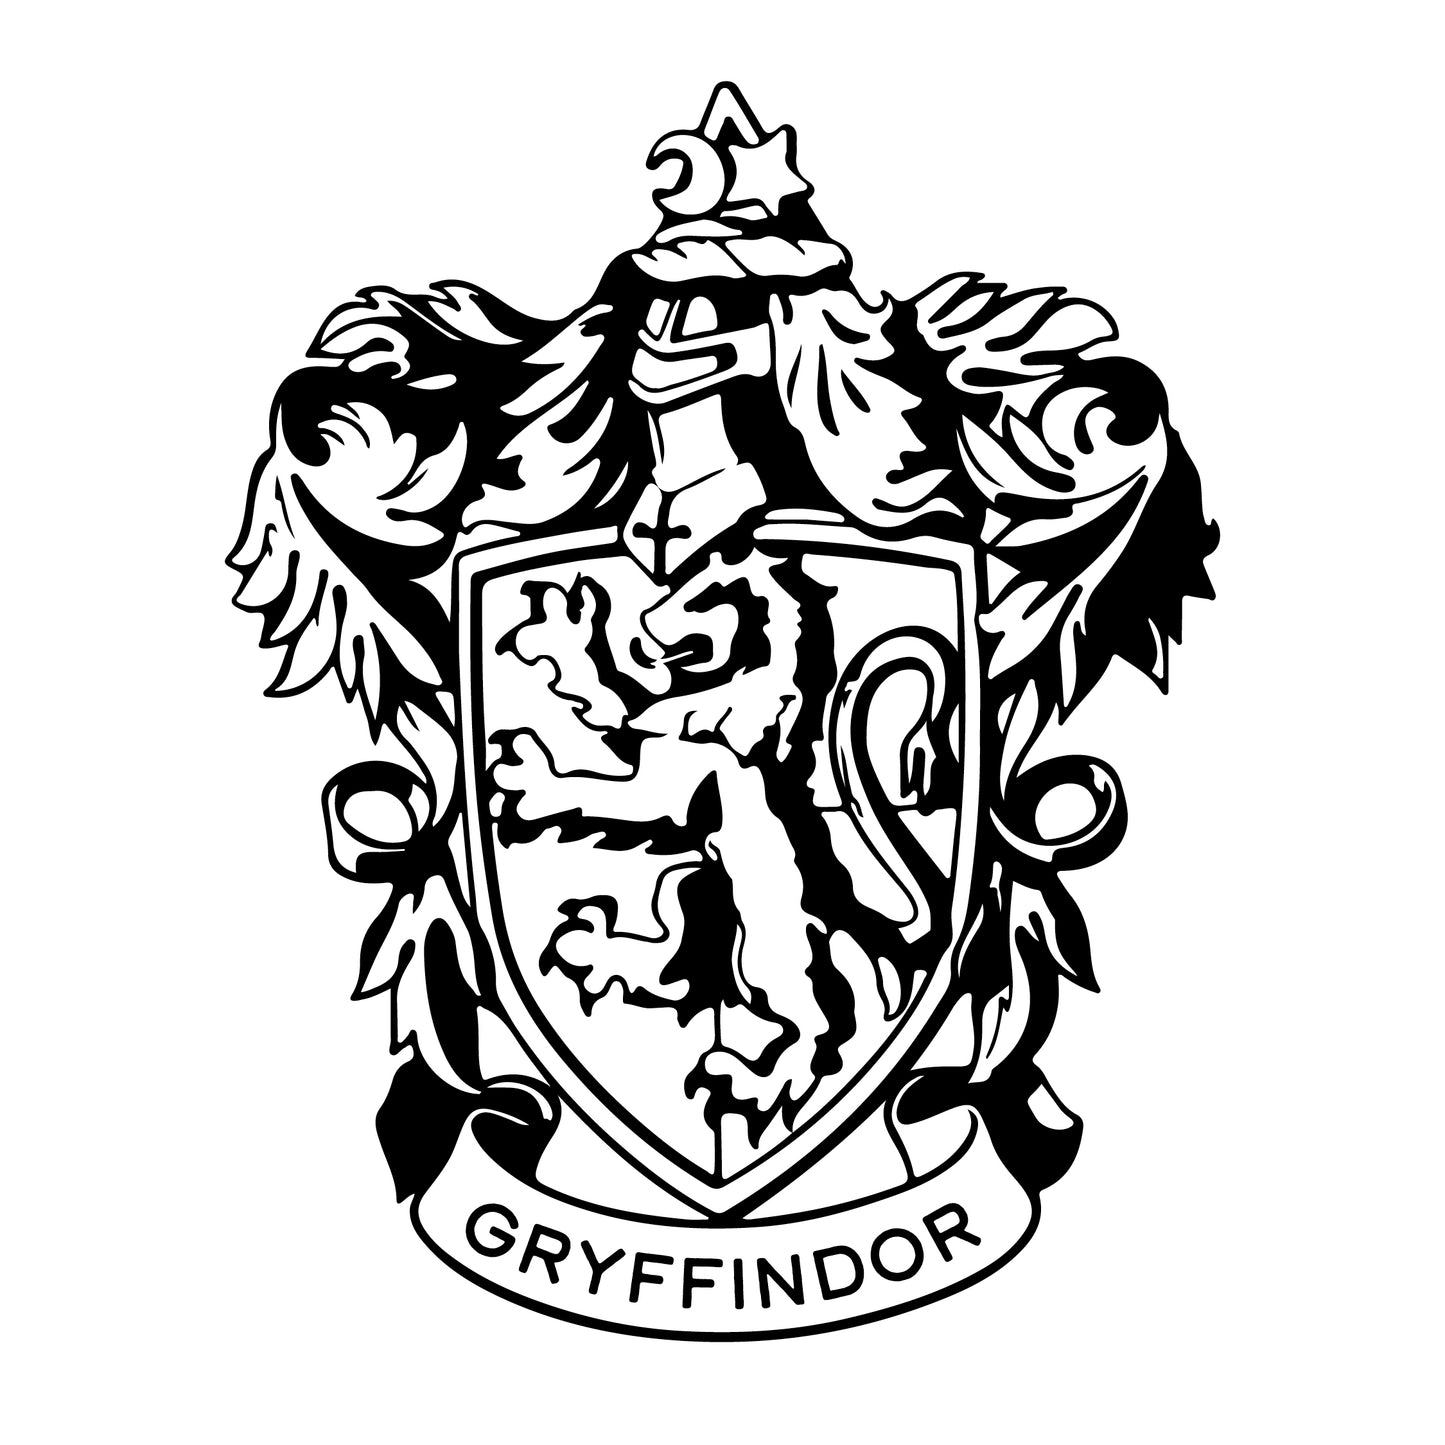 Harry Potter - Slytherin Hufflepuff Gryffindor Ravenclaw emblem wall graphics